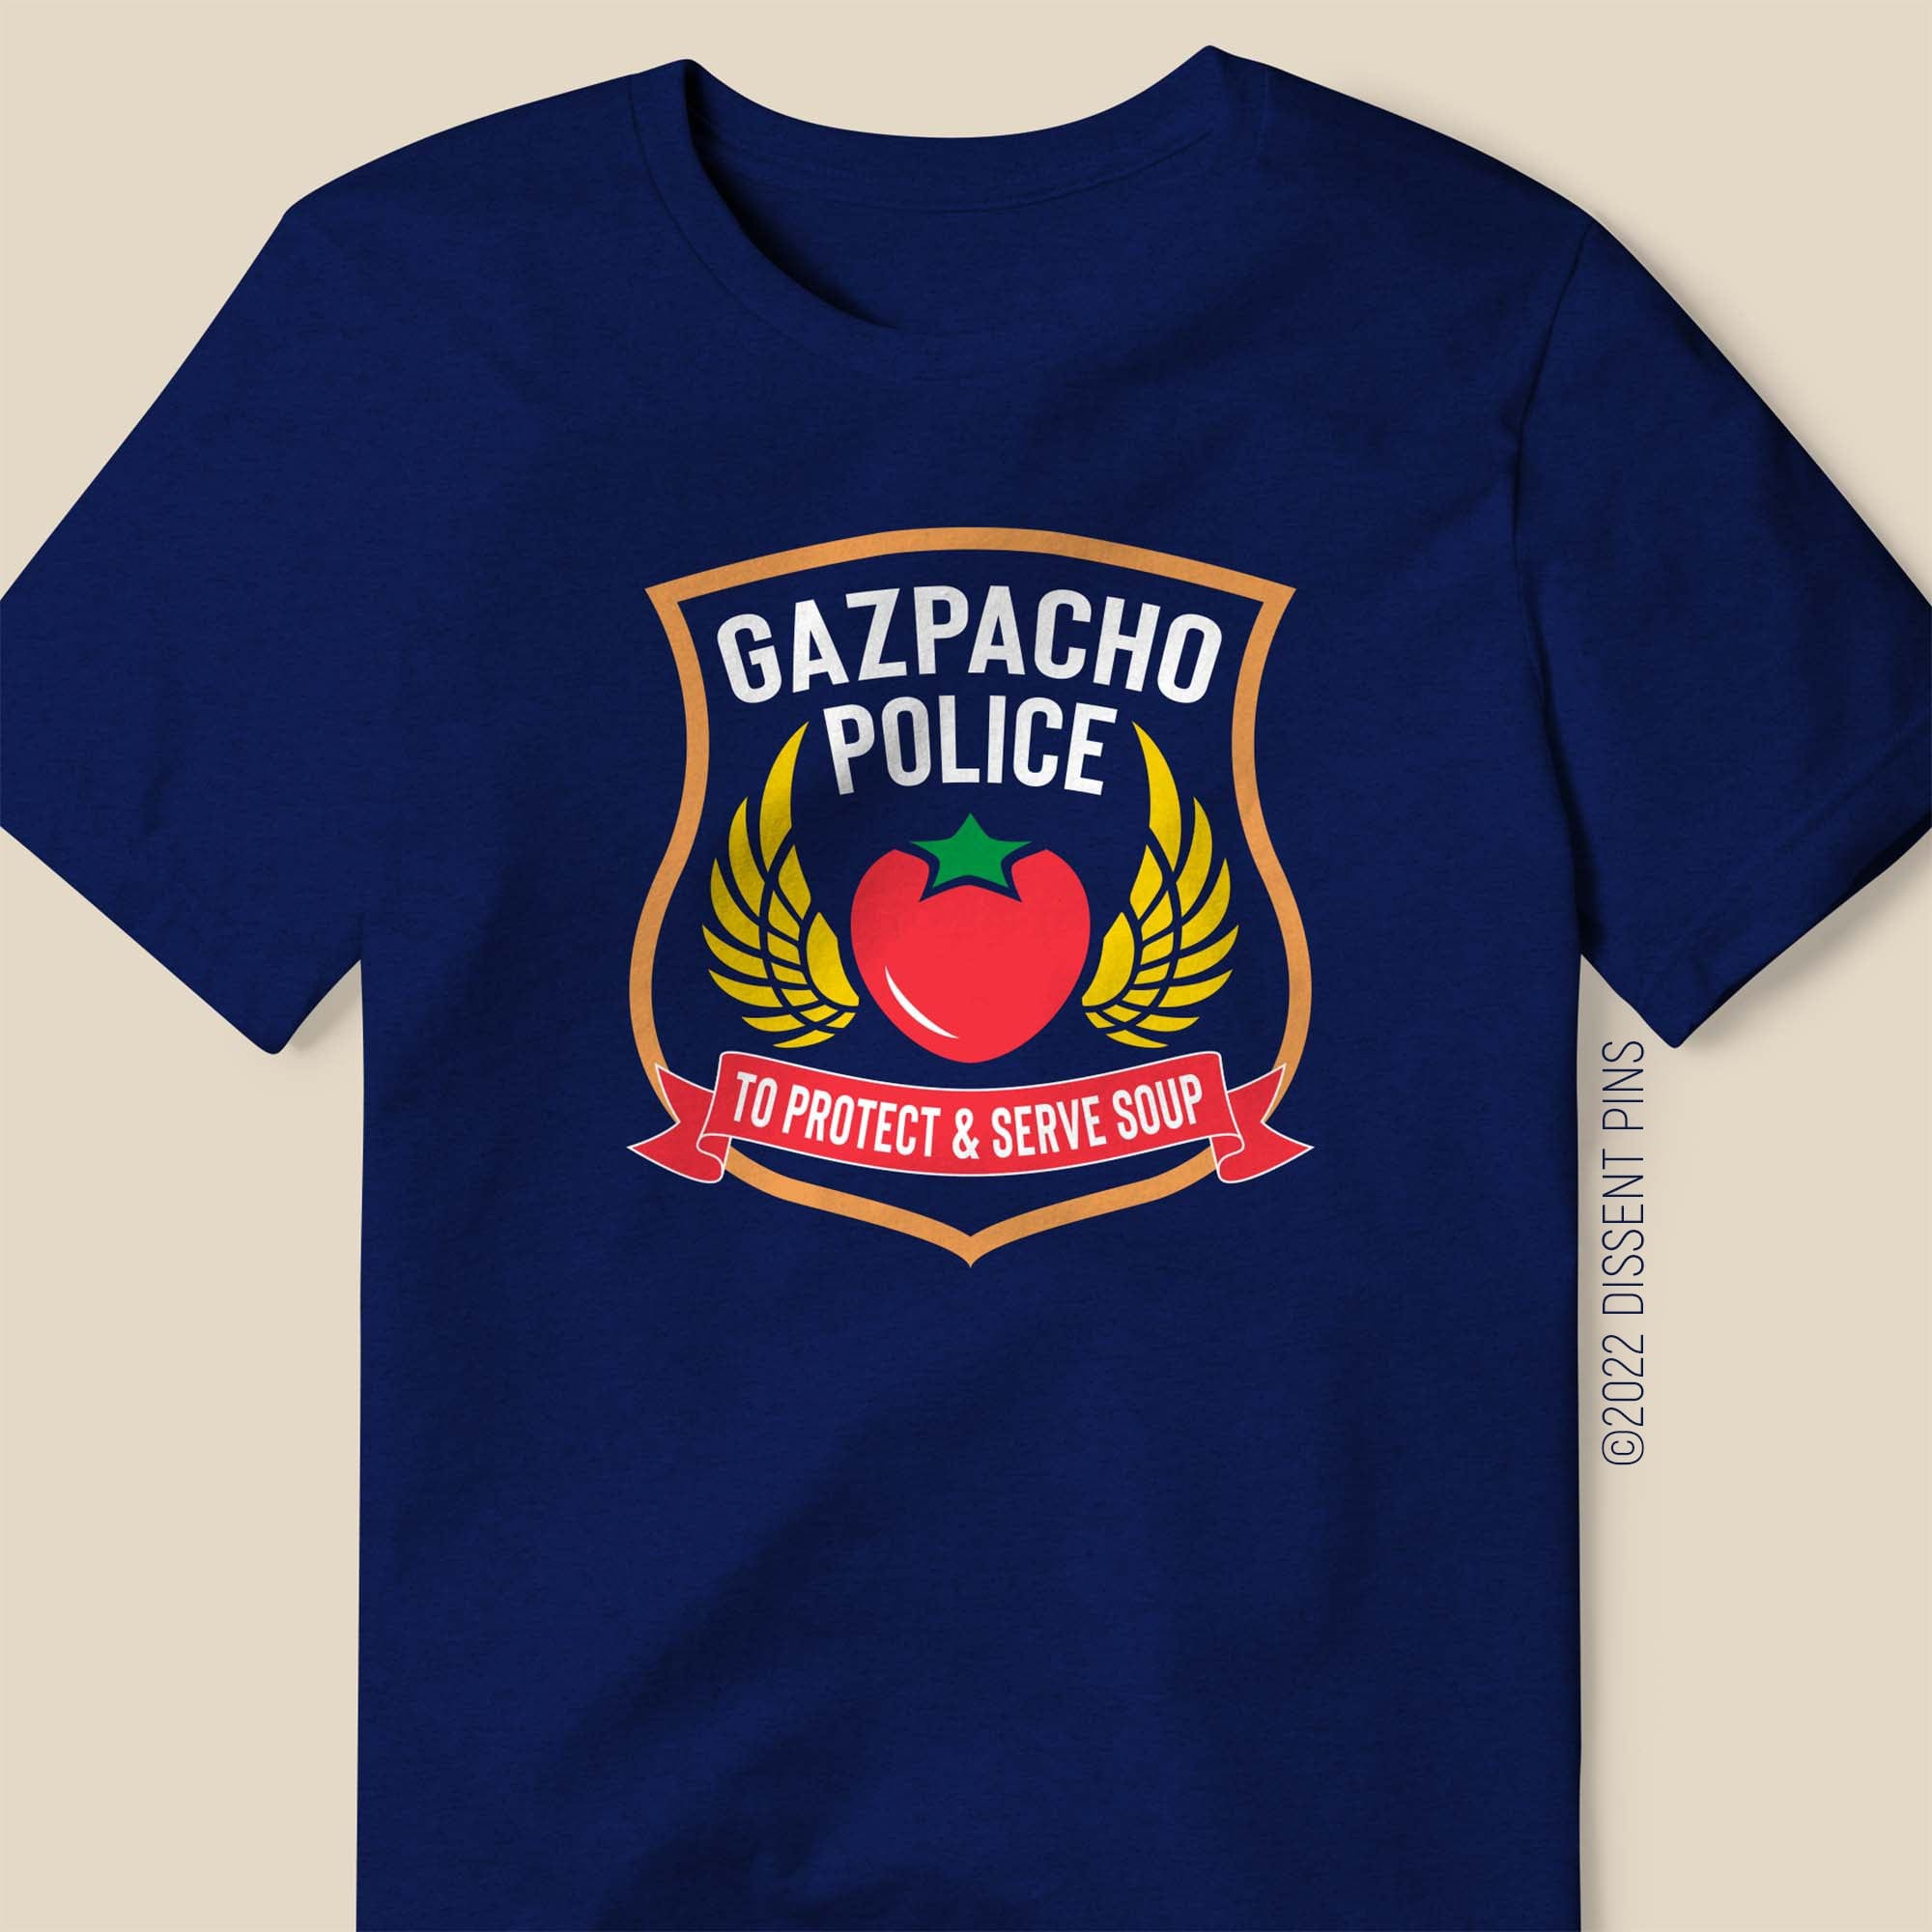 Gazpacho Police T-shirt